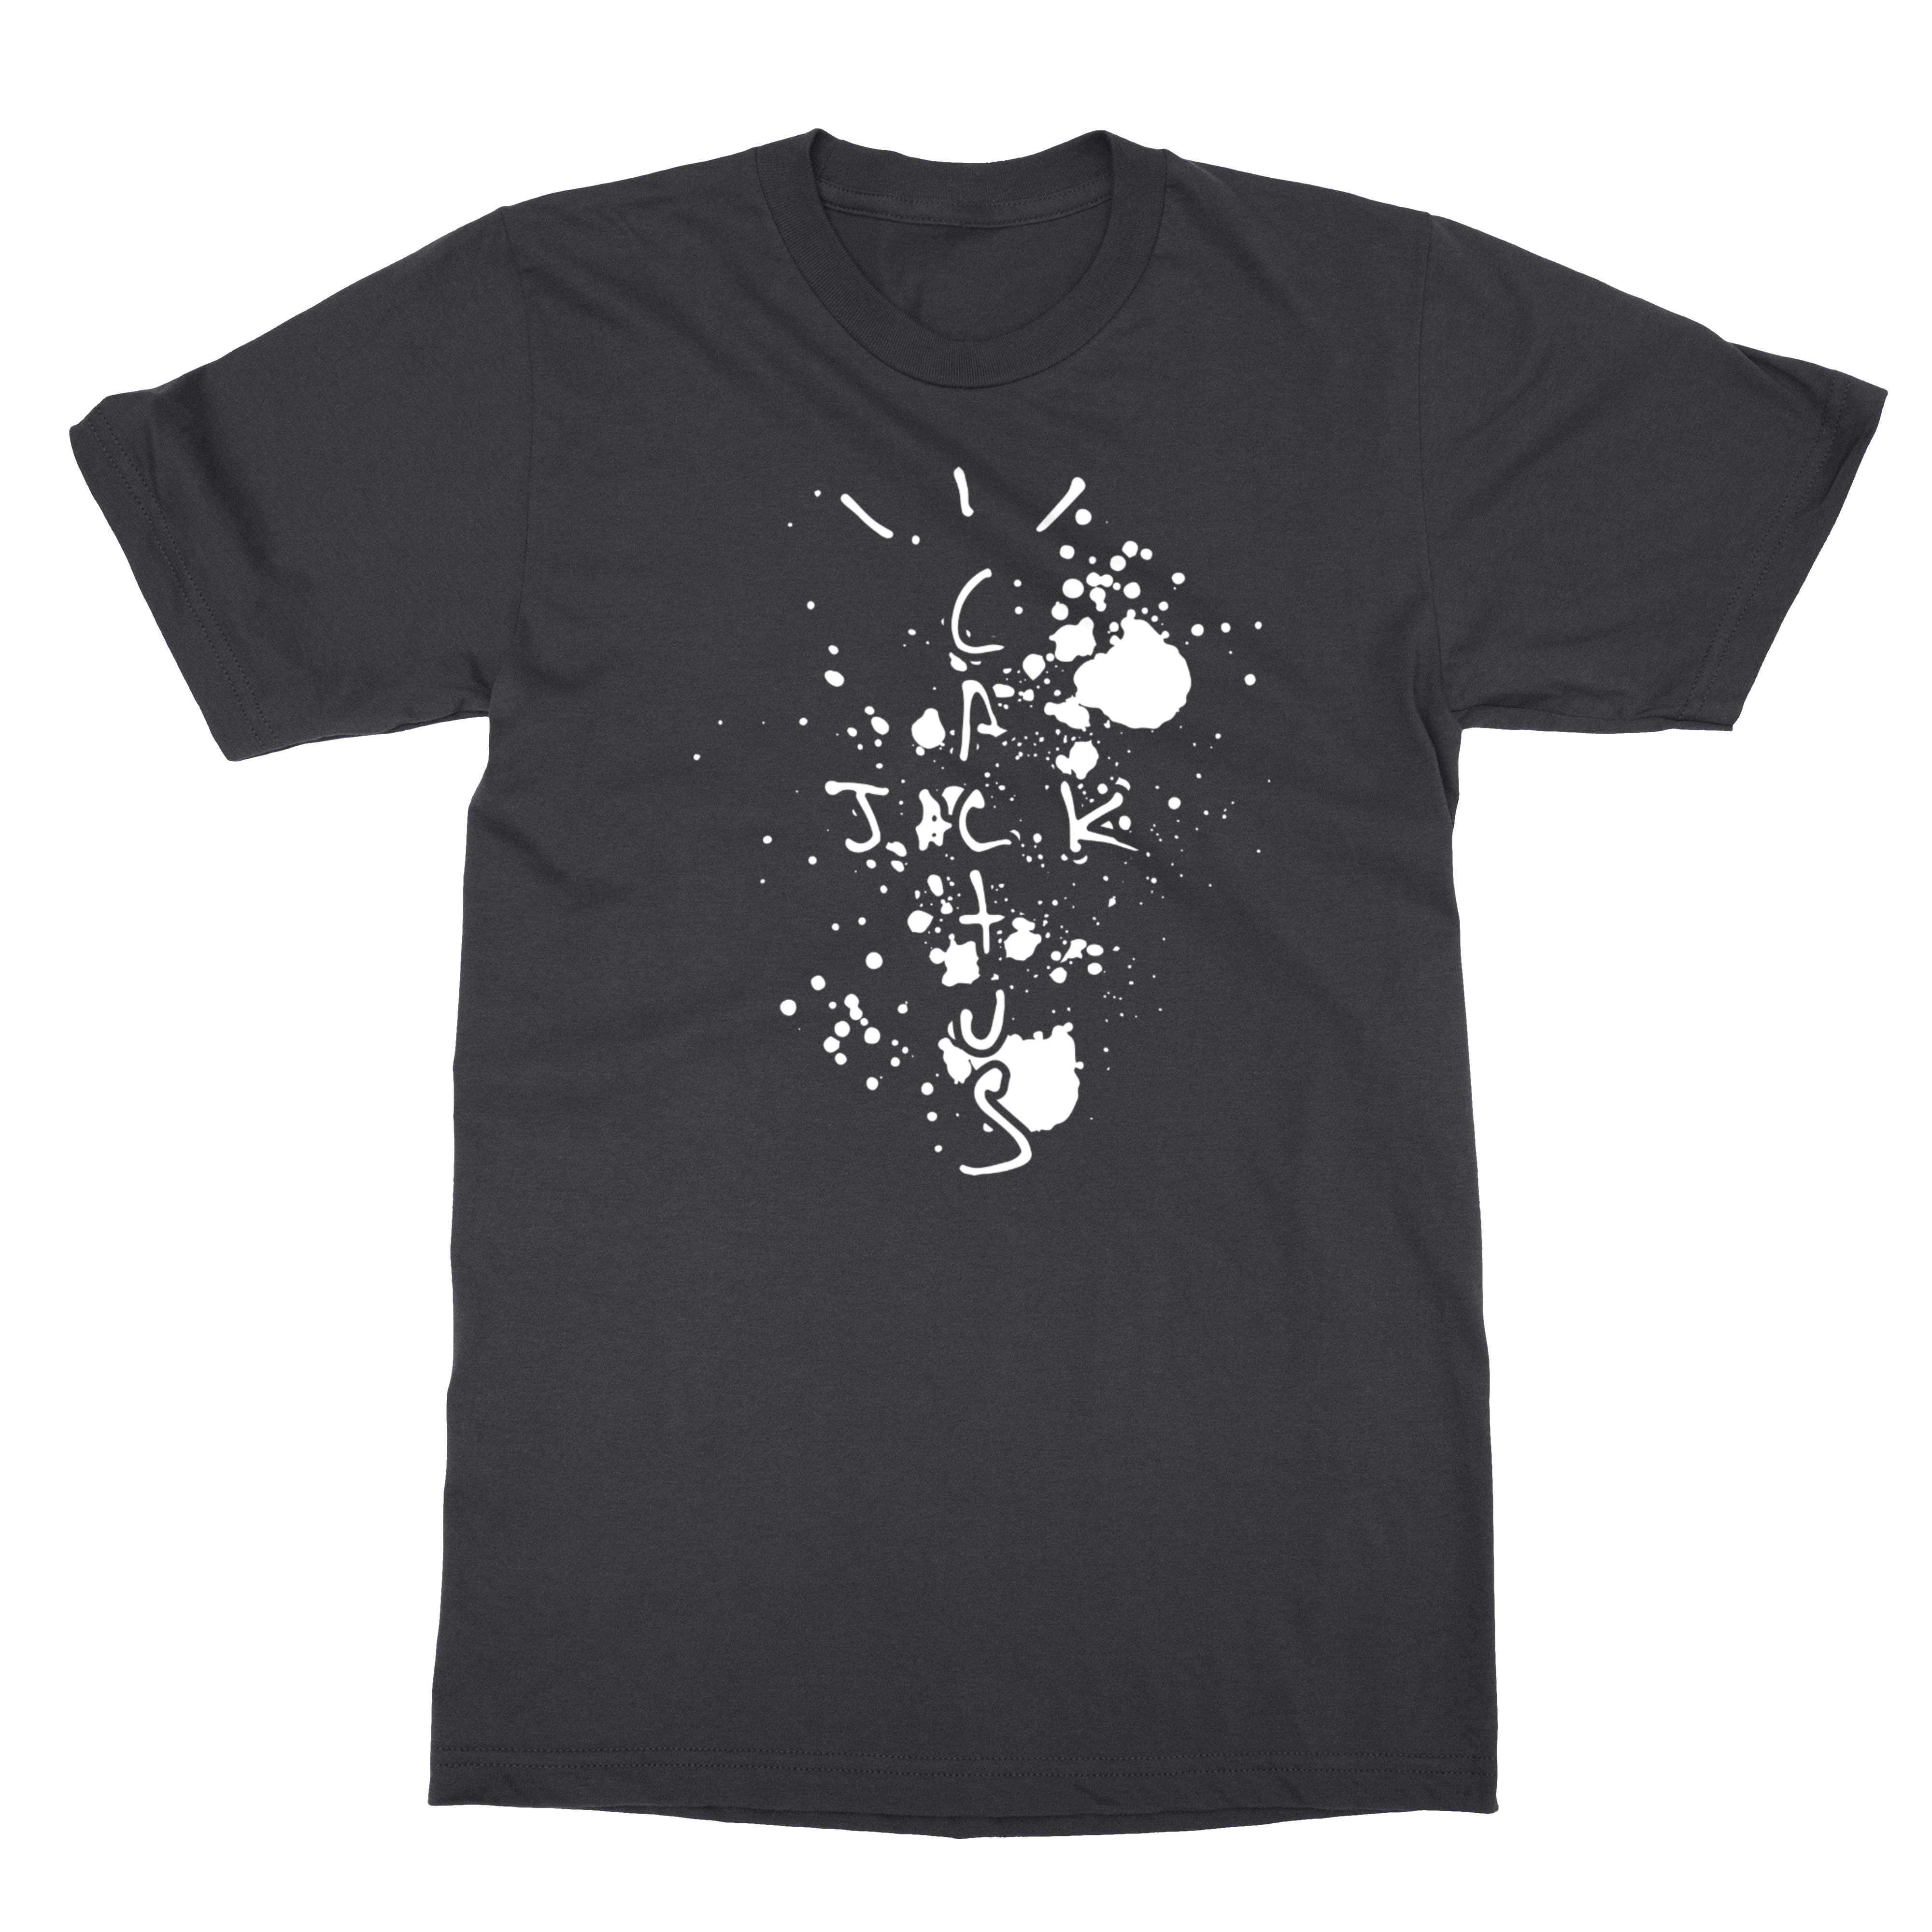 Travis Scott - Cactus Jack Men's T-Shirt | eBay